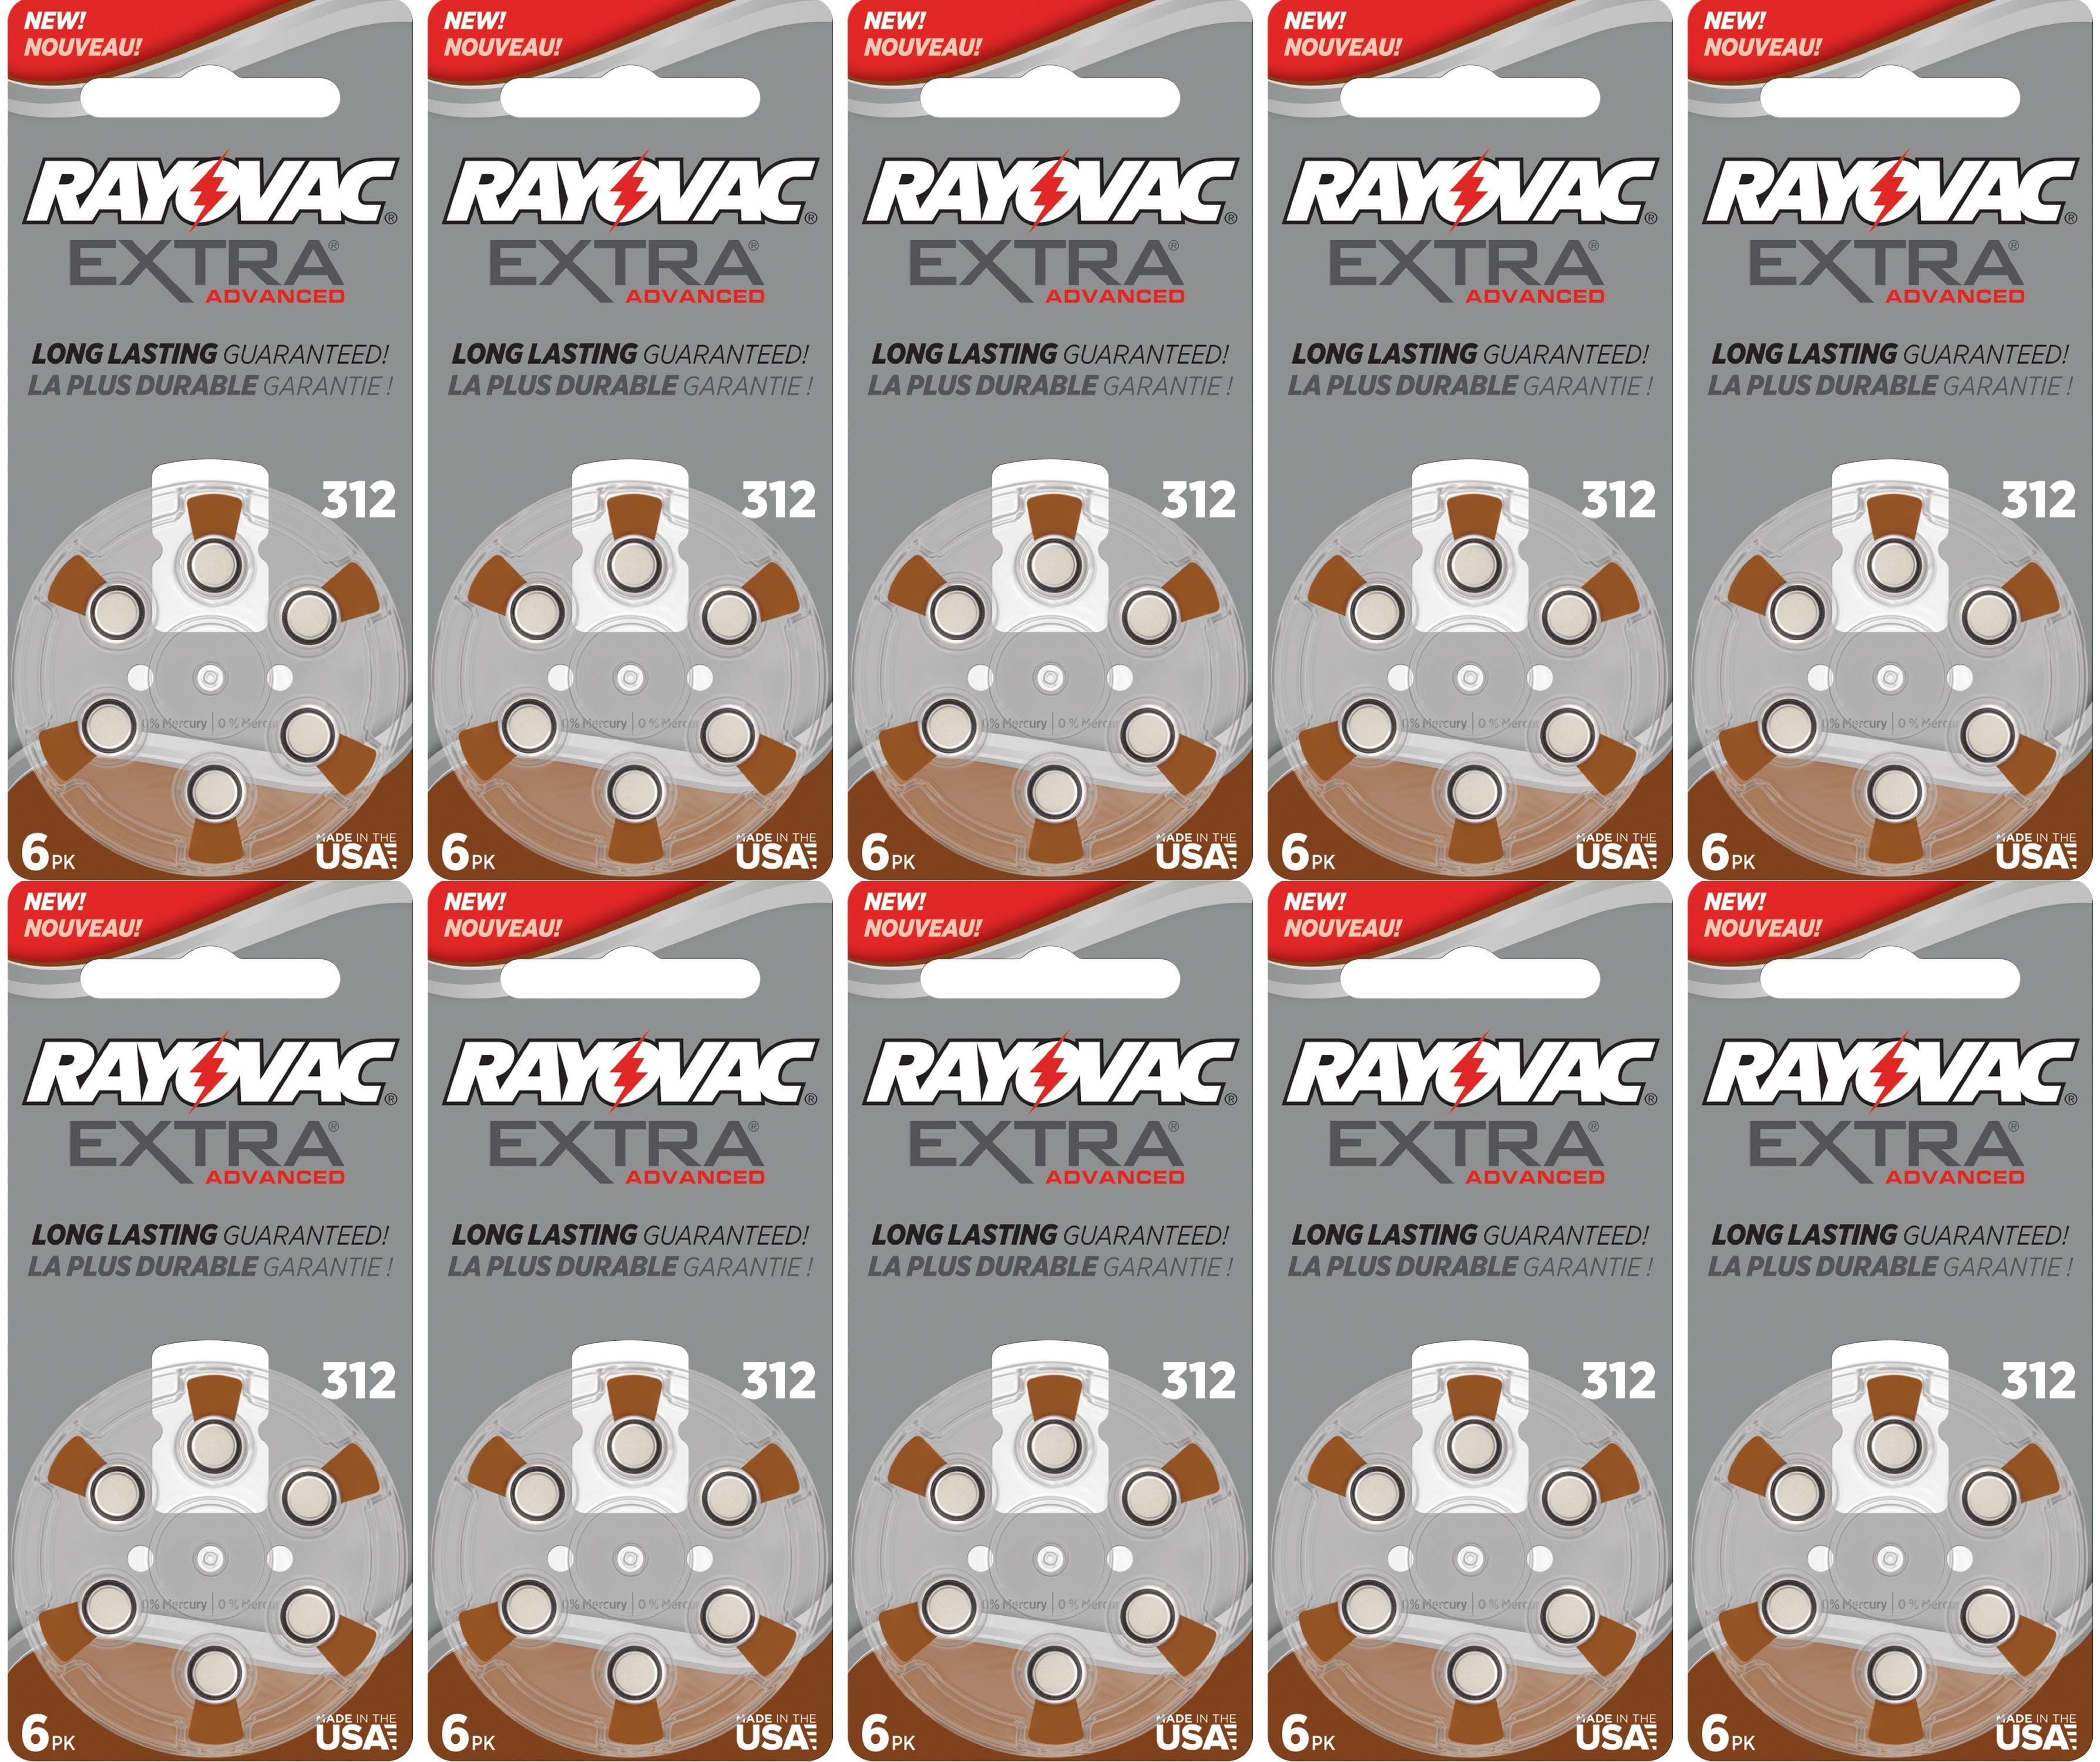  120 x Size 312 Rayovac Extra Advanced Hearing Aid Batteries :  Electronics